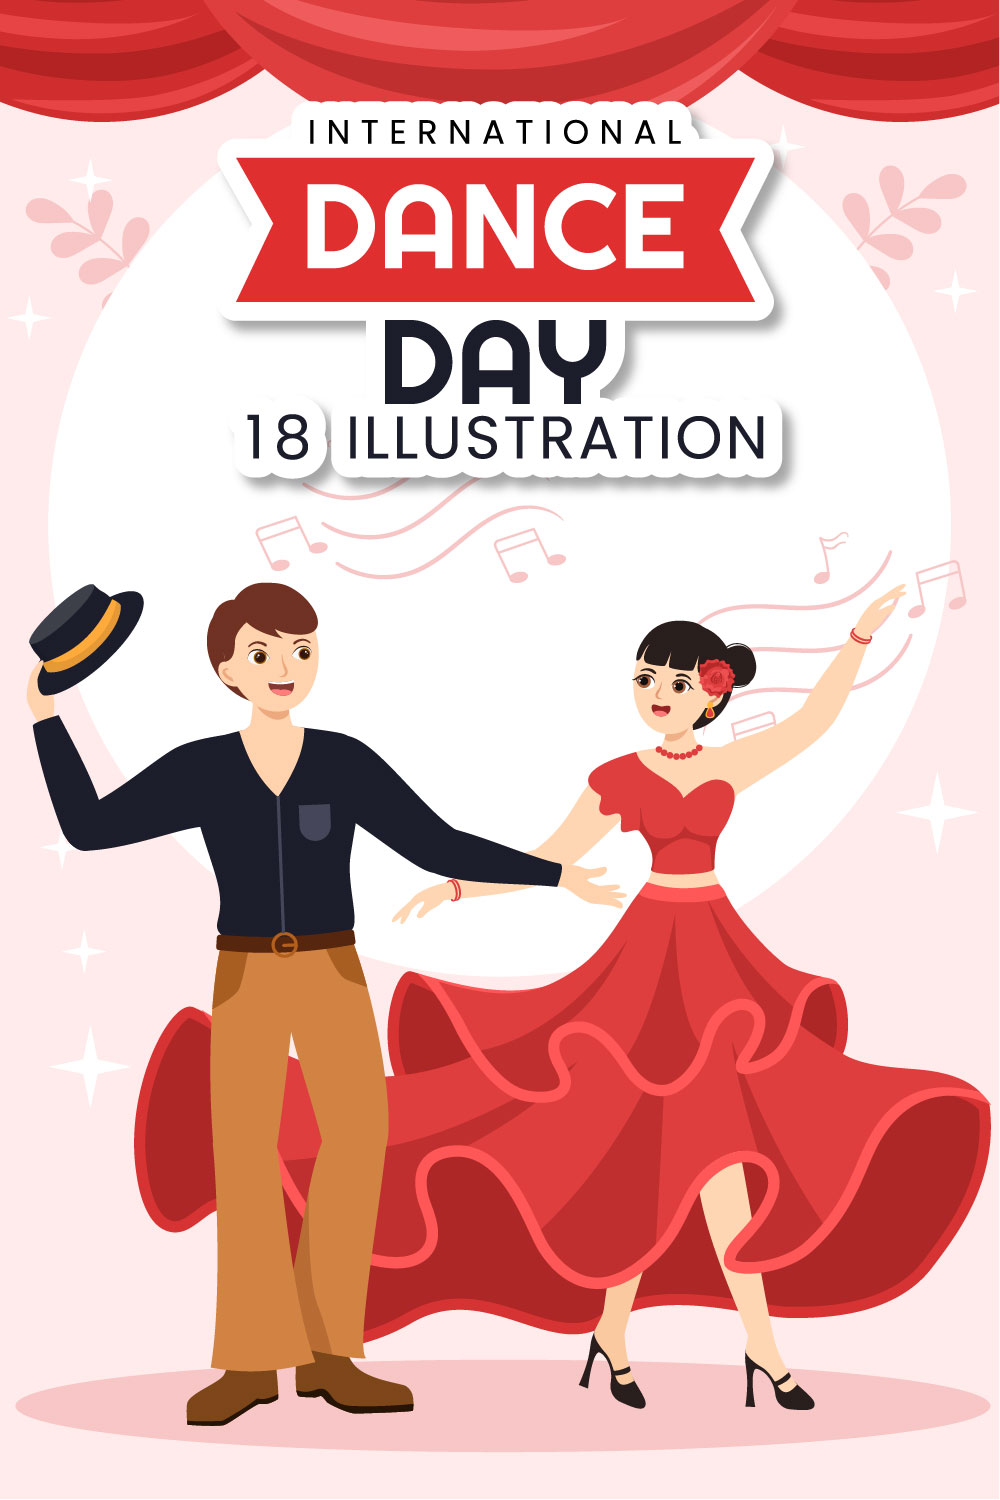 18 International Dance Day Illustration pinterest preview image.